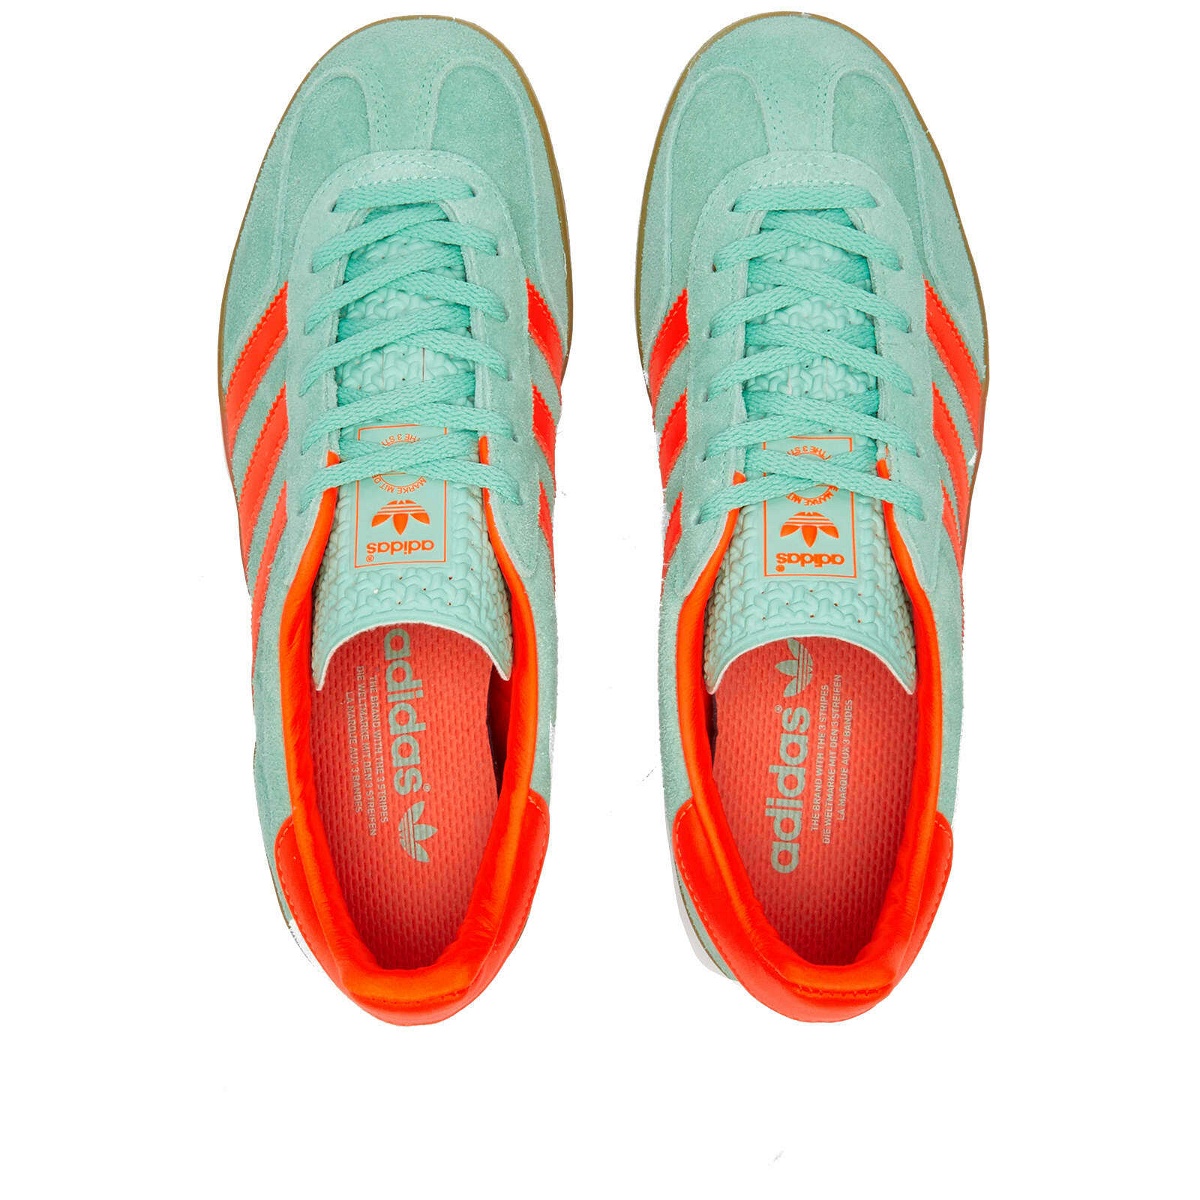 Adidas Gazelle Indoor W Sneakers in Pulse Mint/Orange adidas